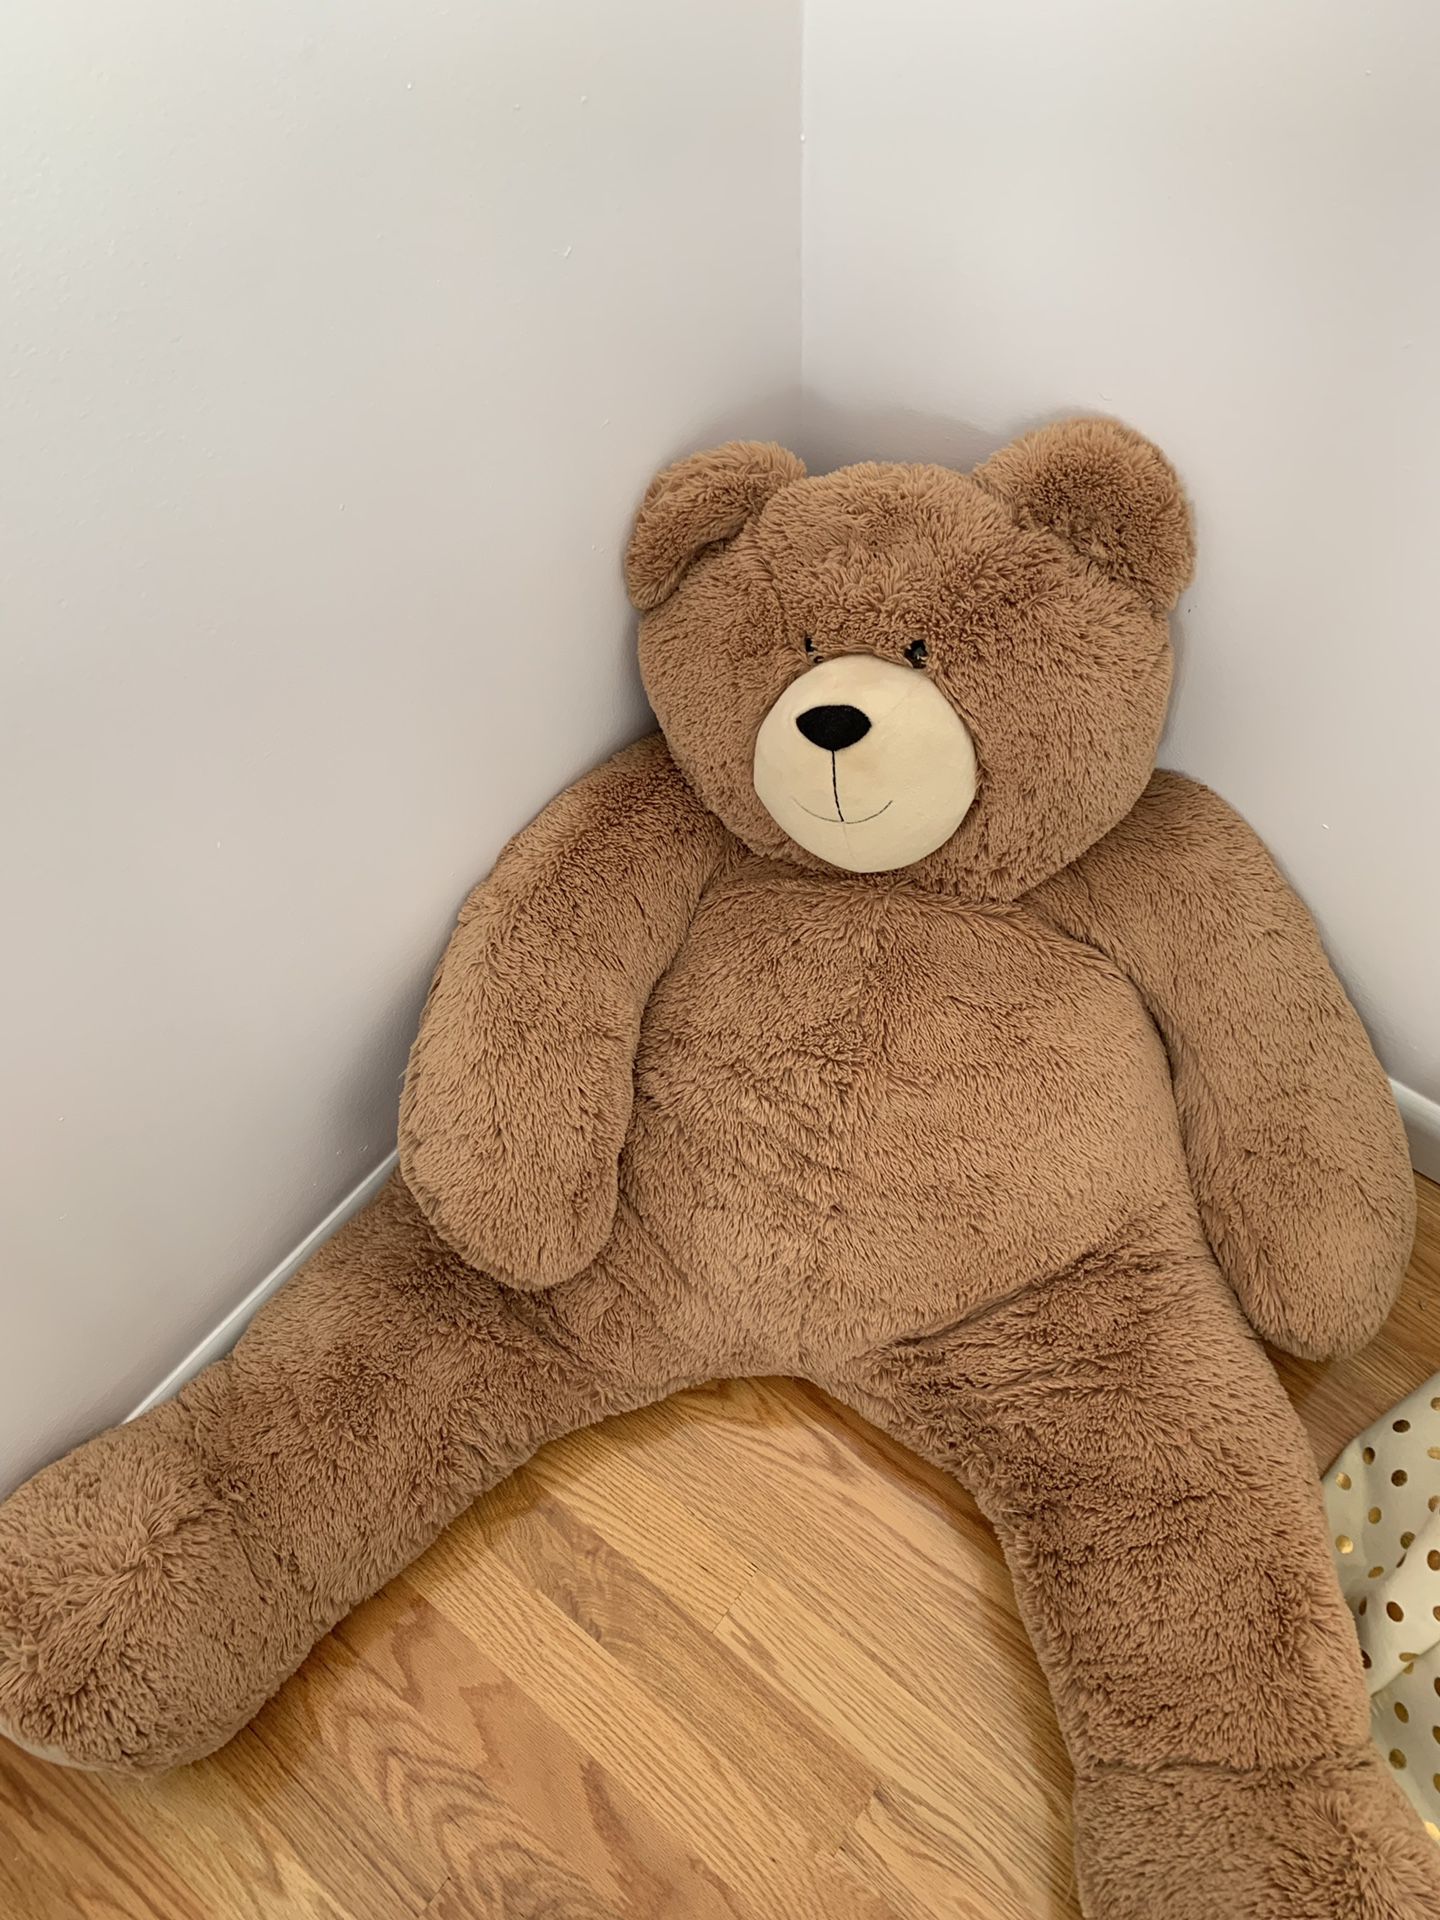 Vermont teddy bear giant stuffed animal